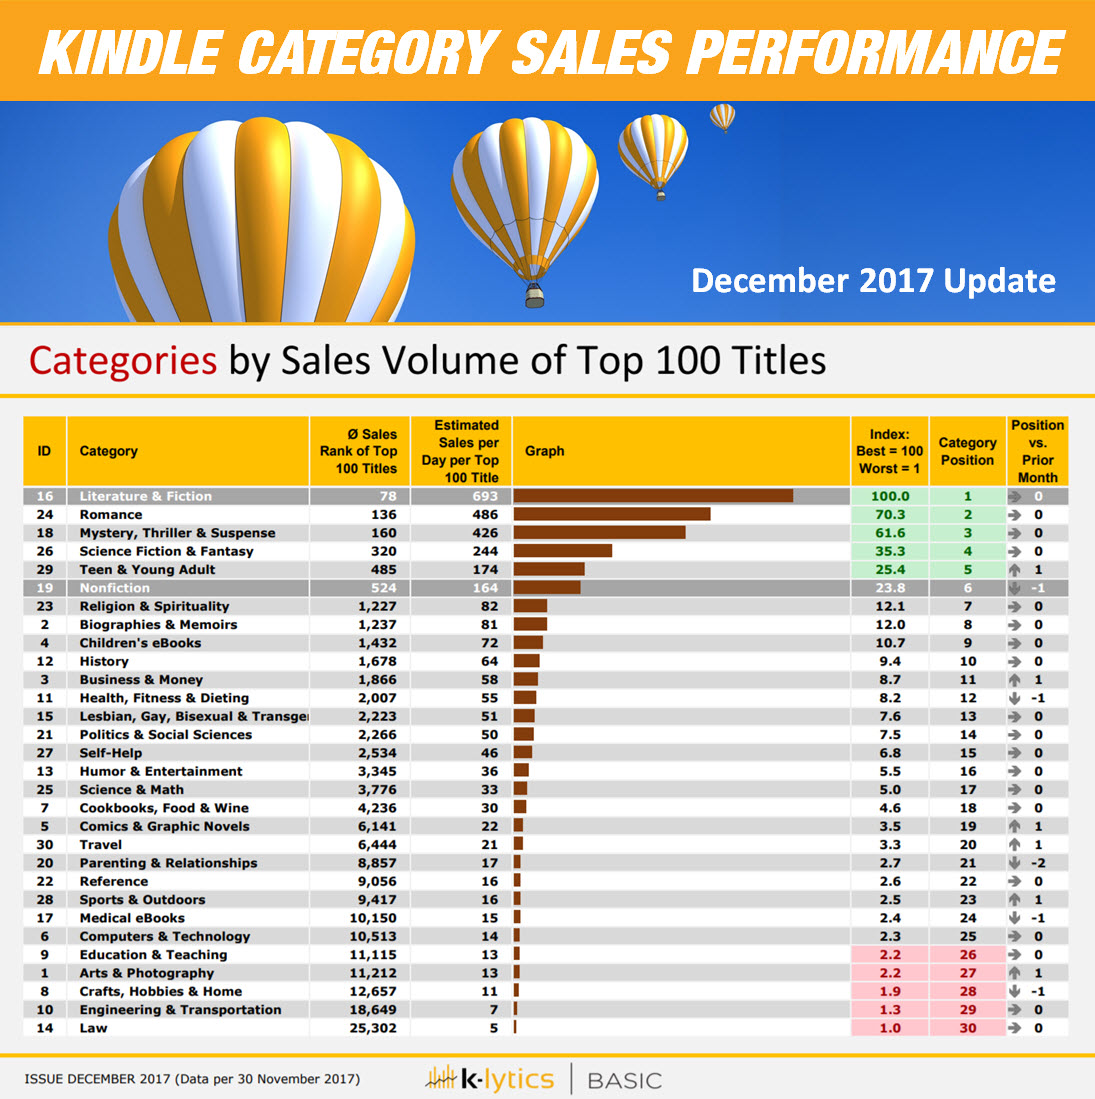 what is amazon sales rank